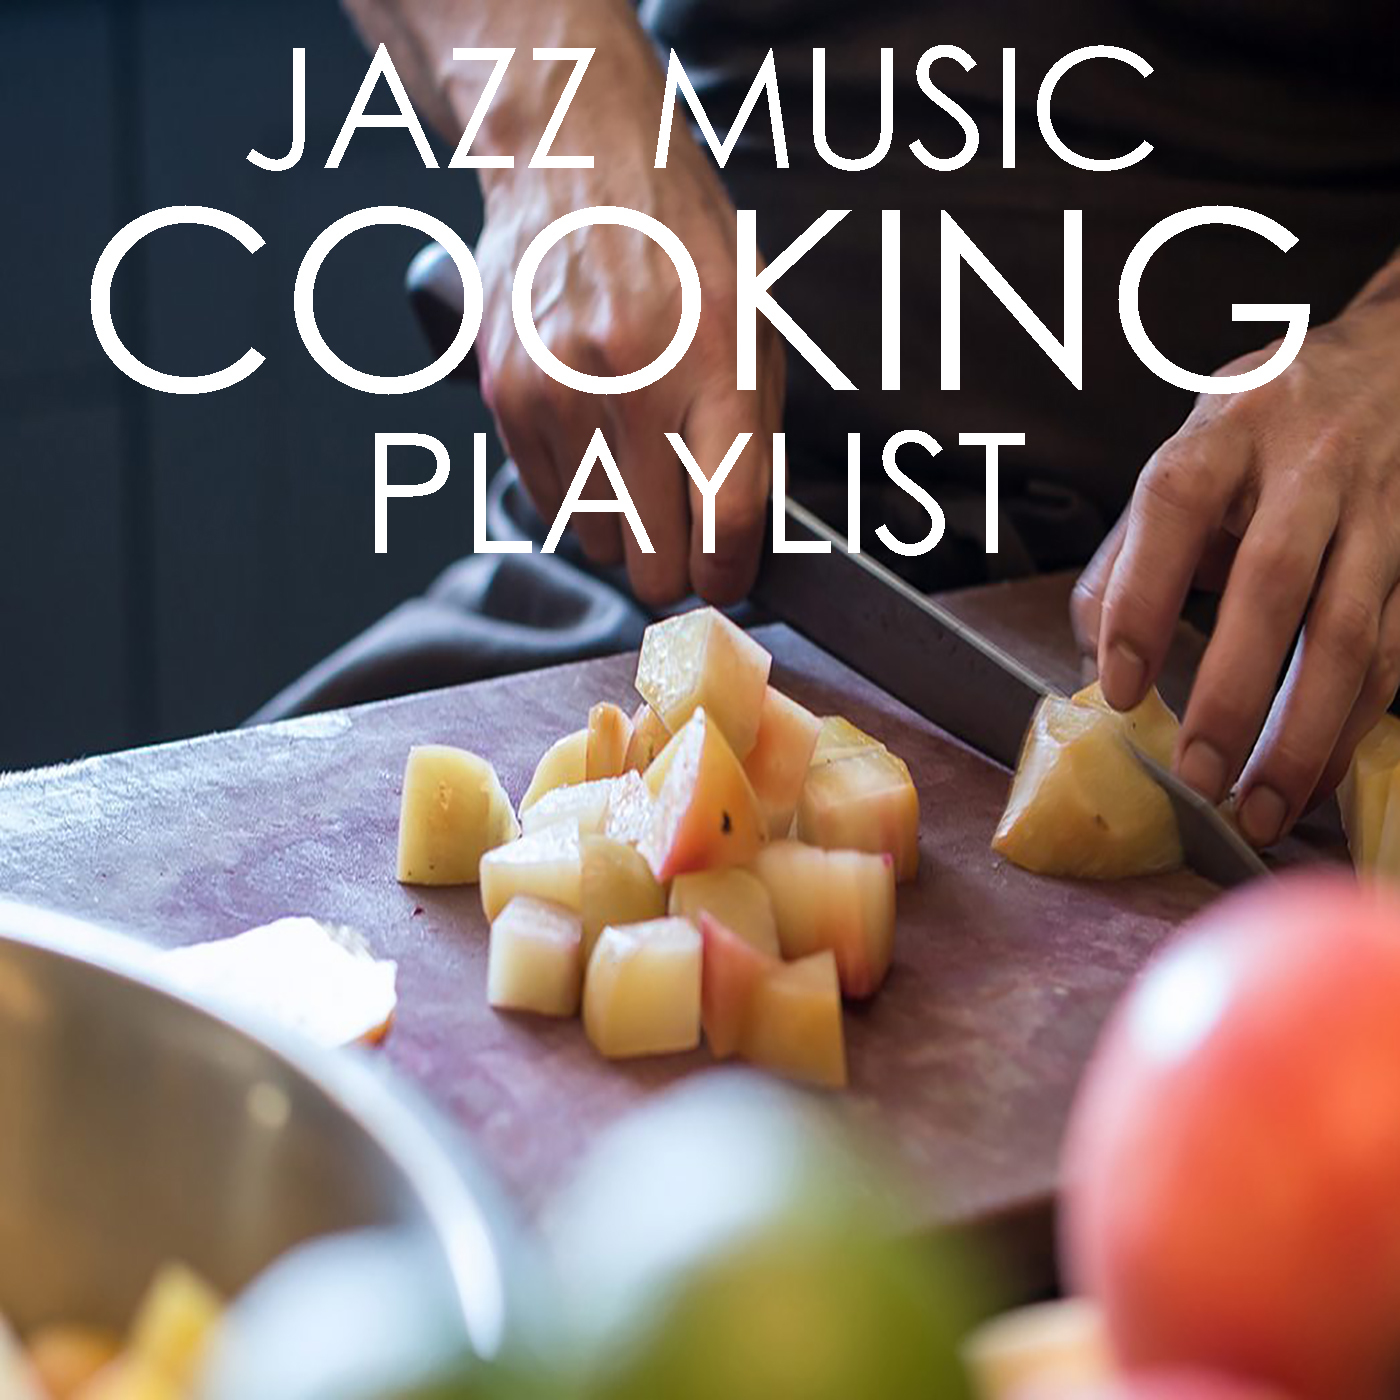 Jazz Music Cooking Playlist